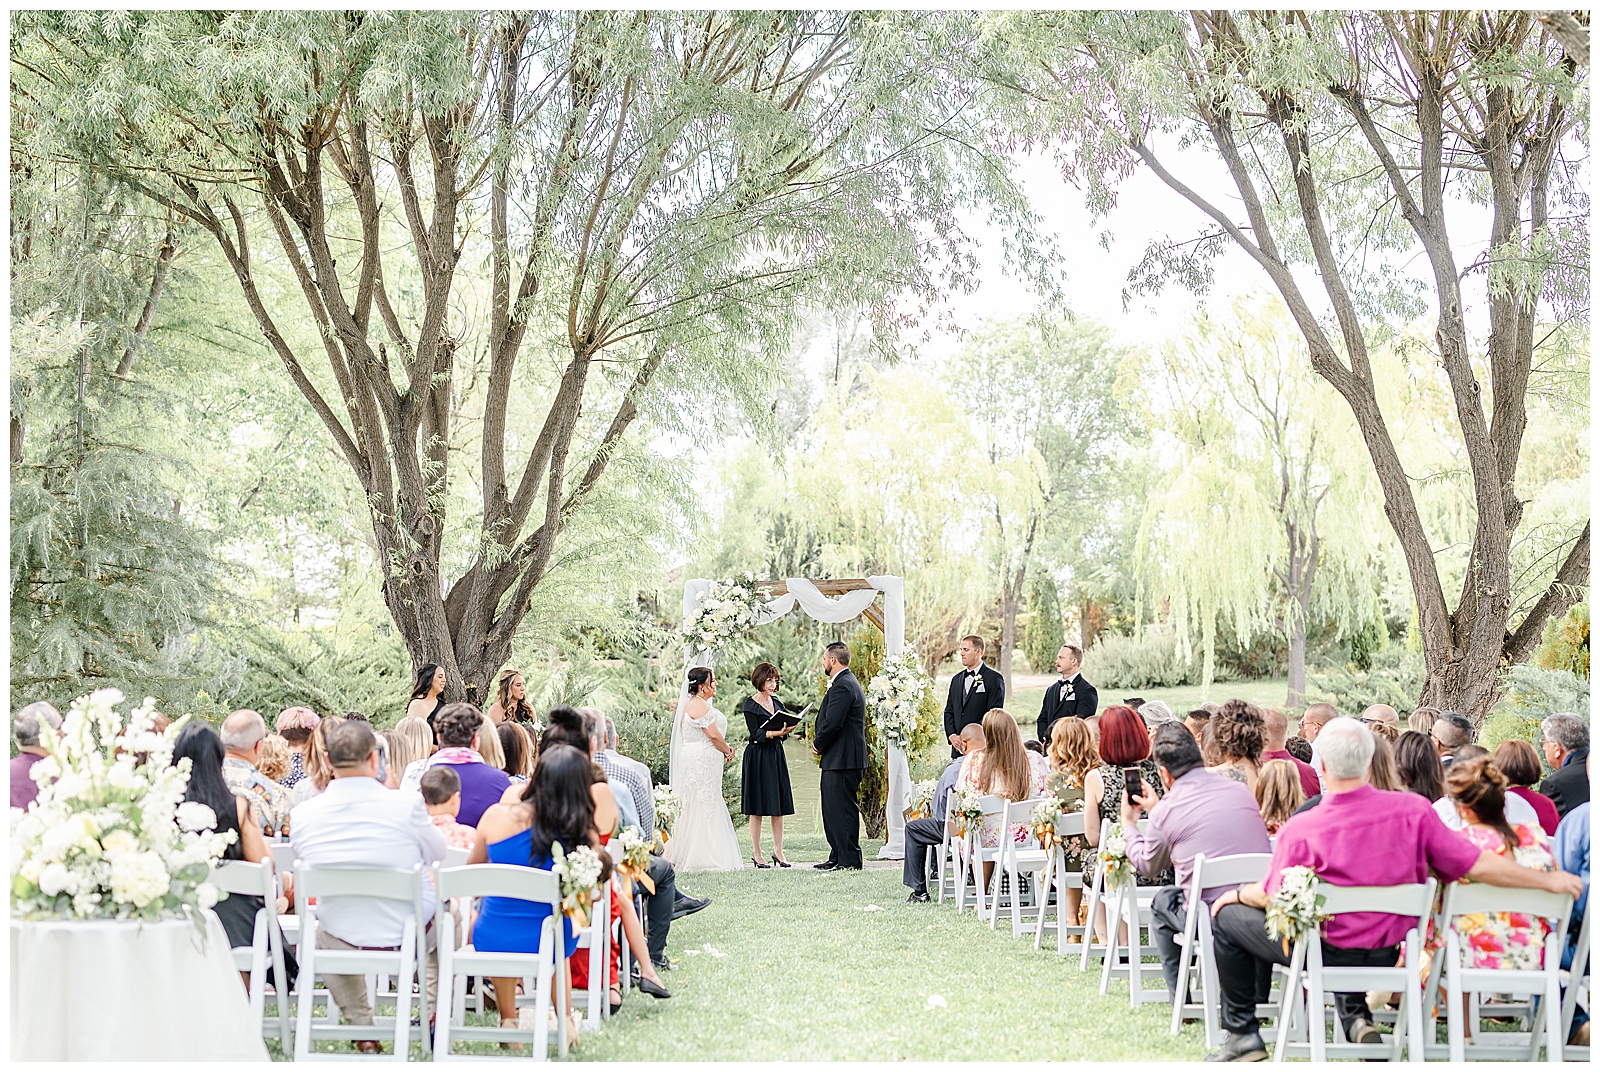 wedding ceremony outdoors under trees